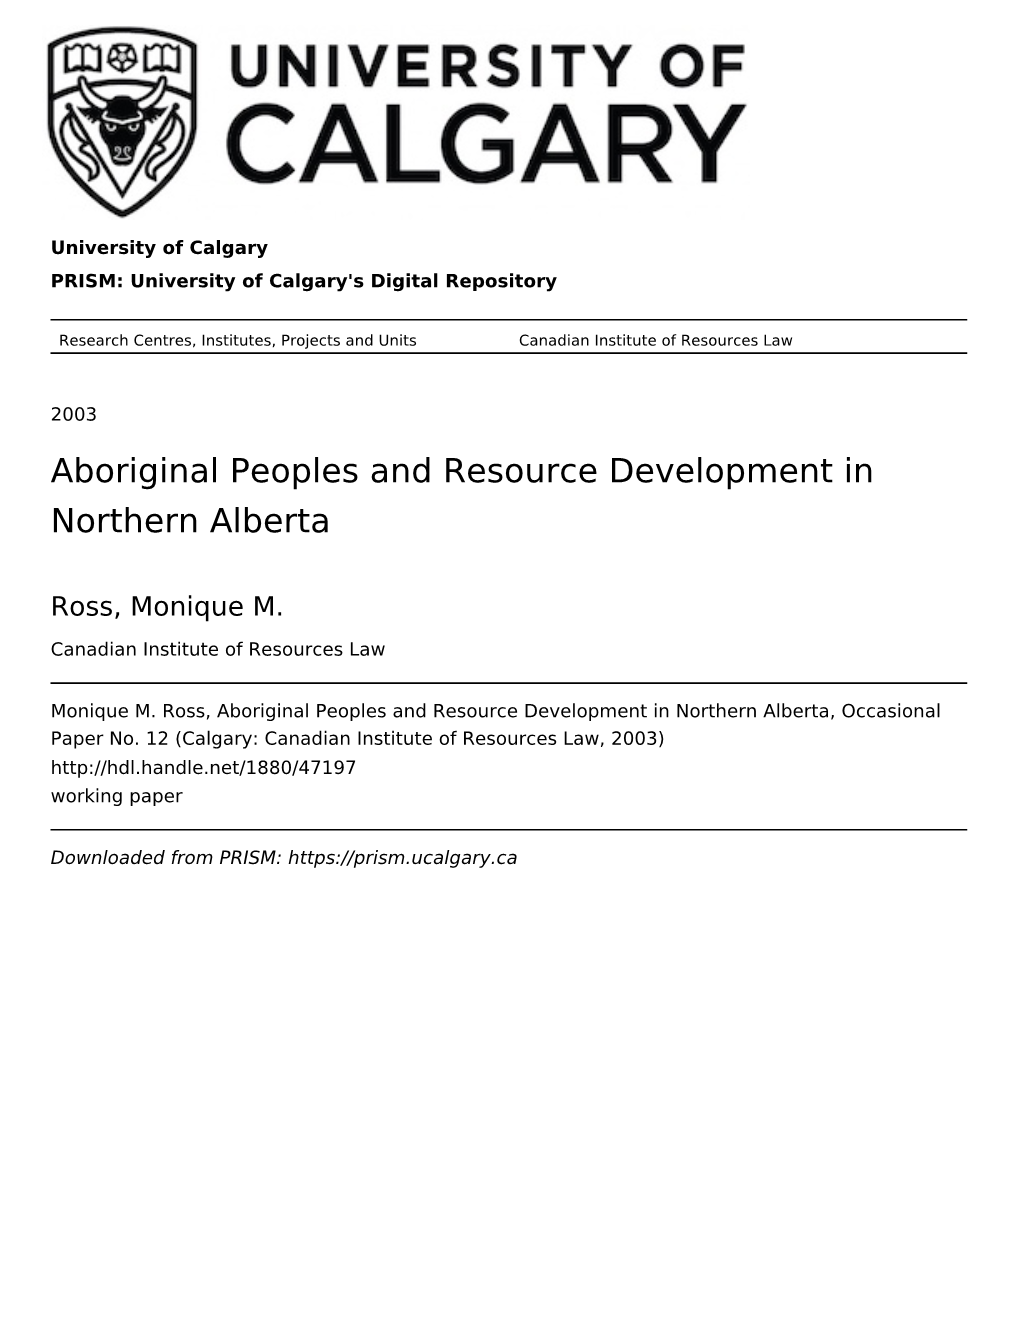 Aboriginal Peoples and Resource Development in Northern Alberta